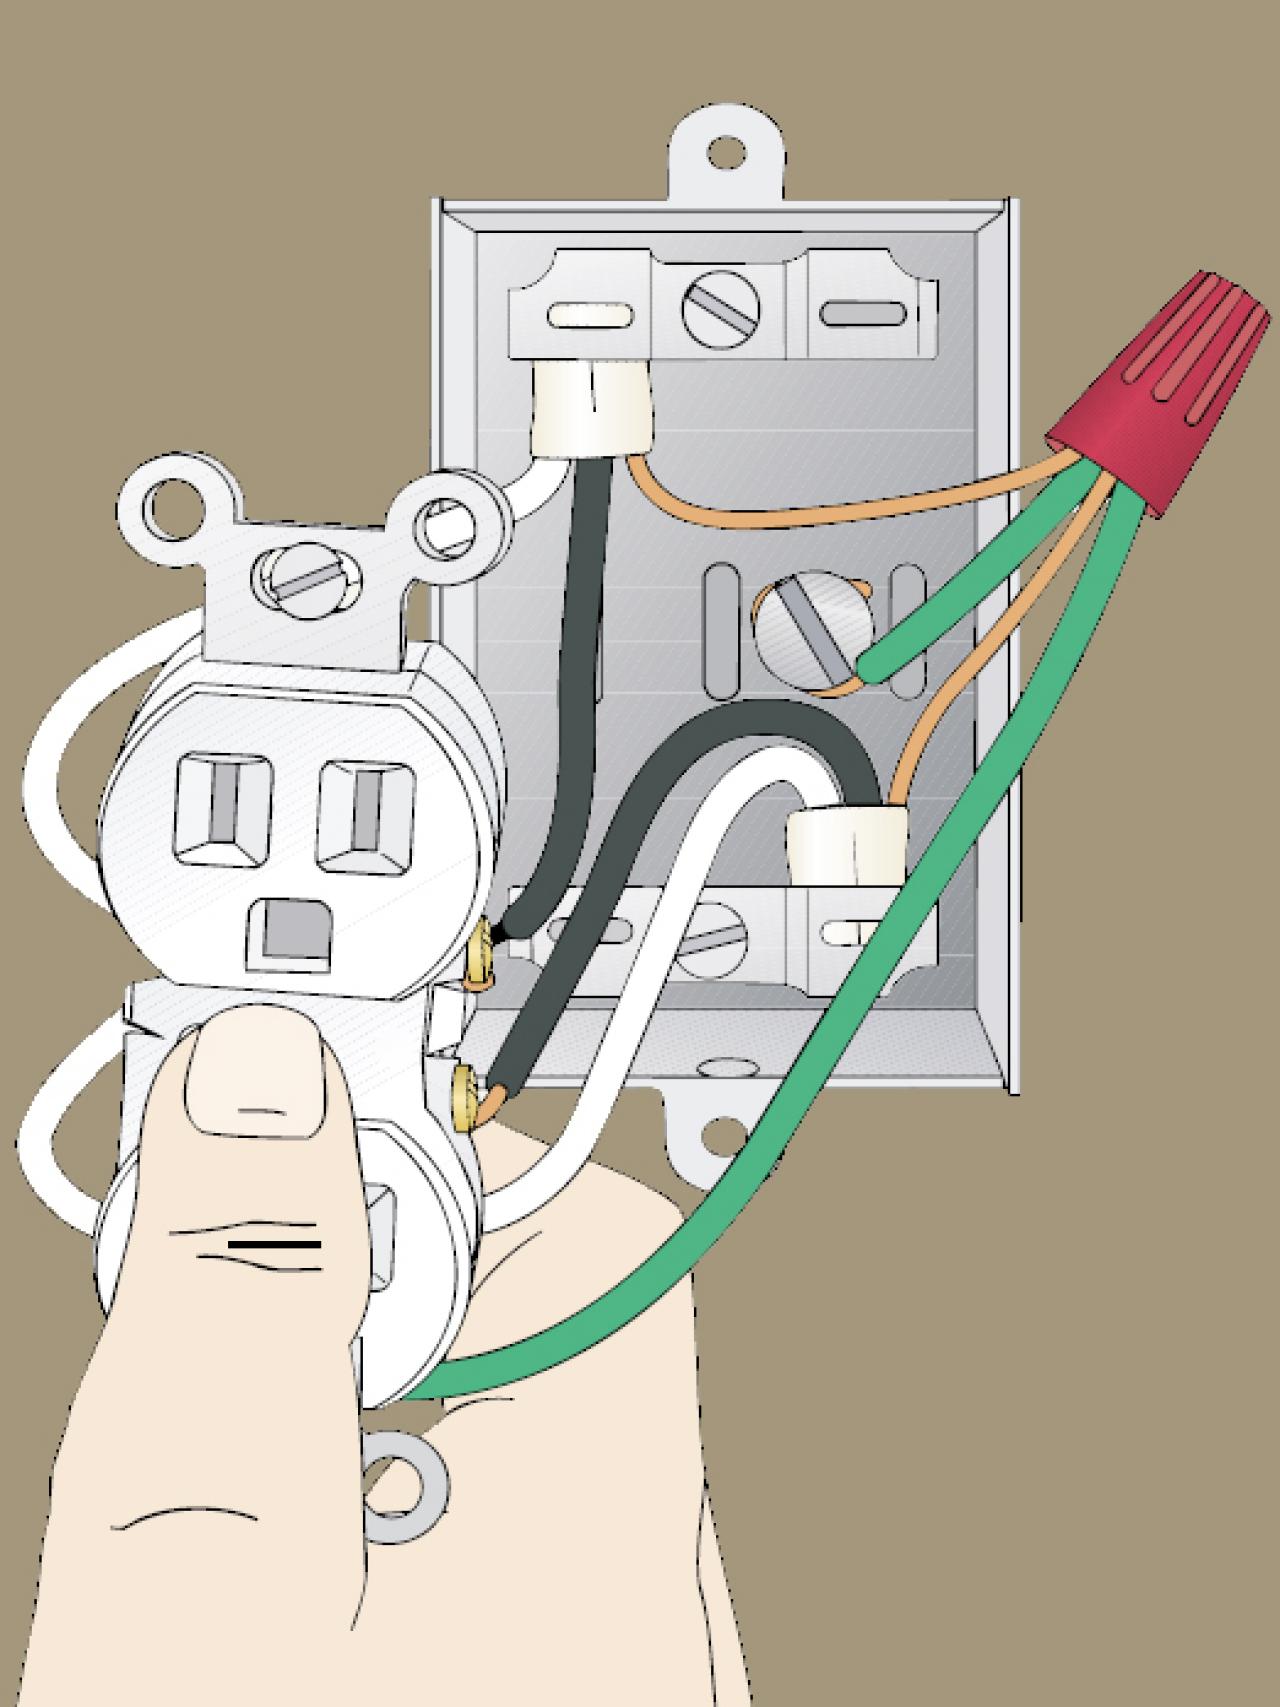 How to Identify Wiring | DIY